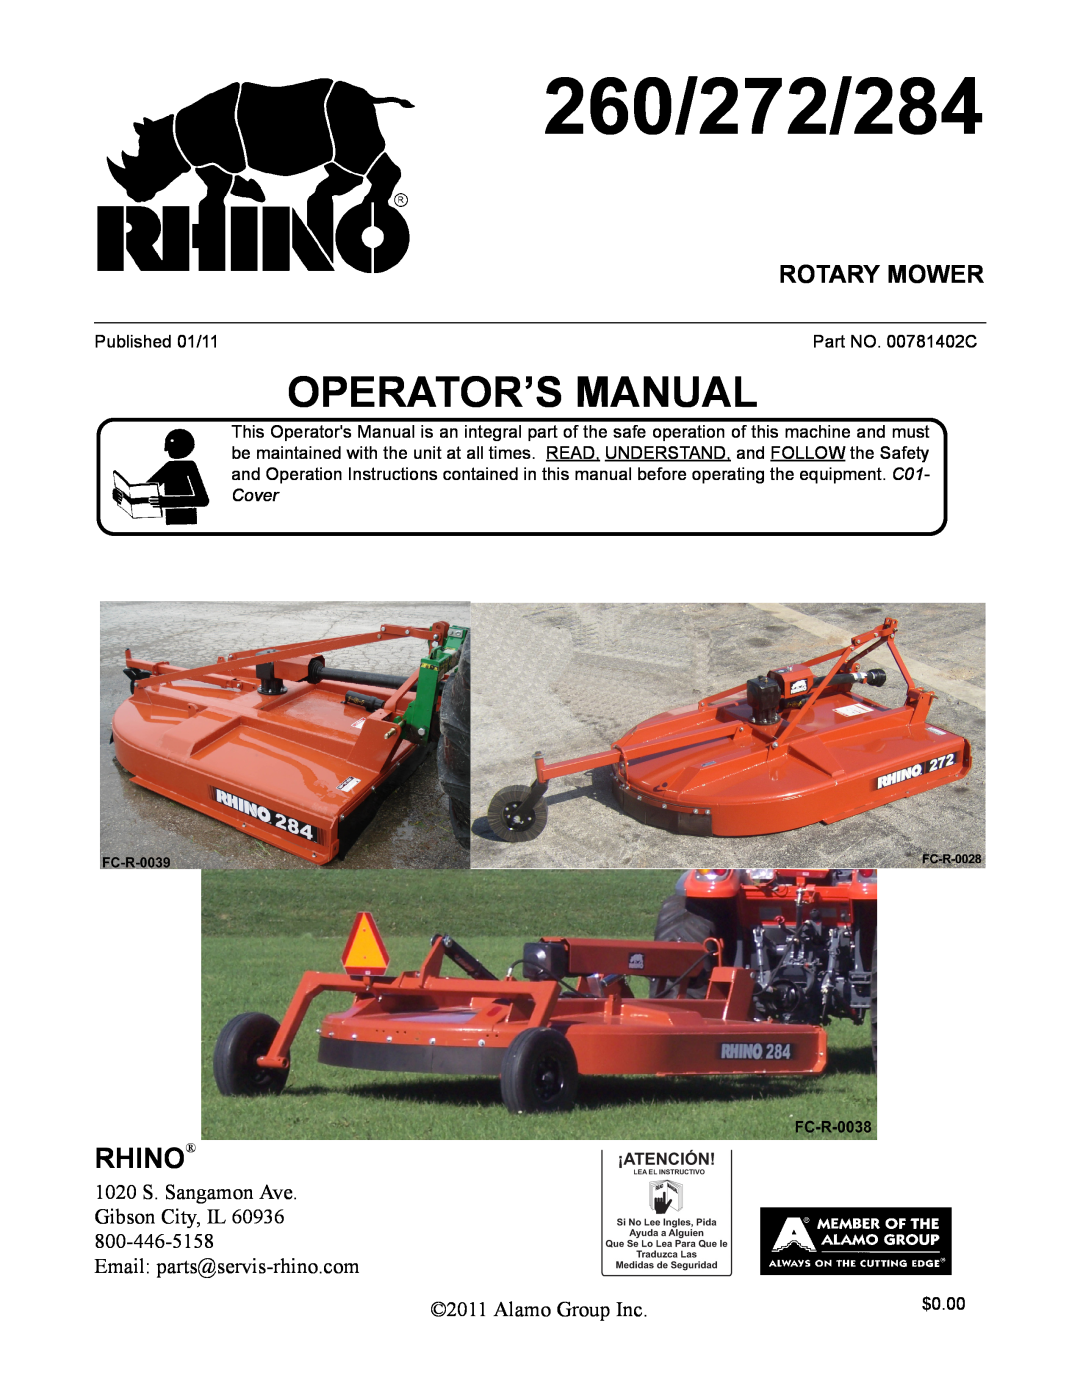 Alamo manual 260/272/284, Rhino, Rotary Mower, Operator’S Manual 